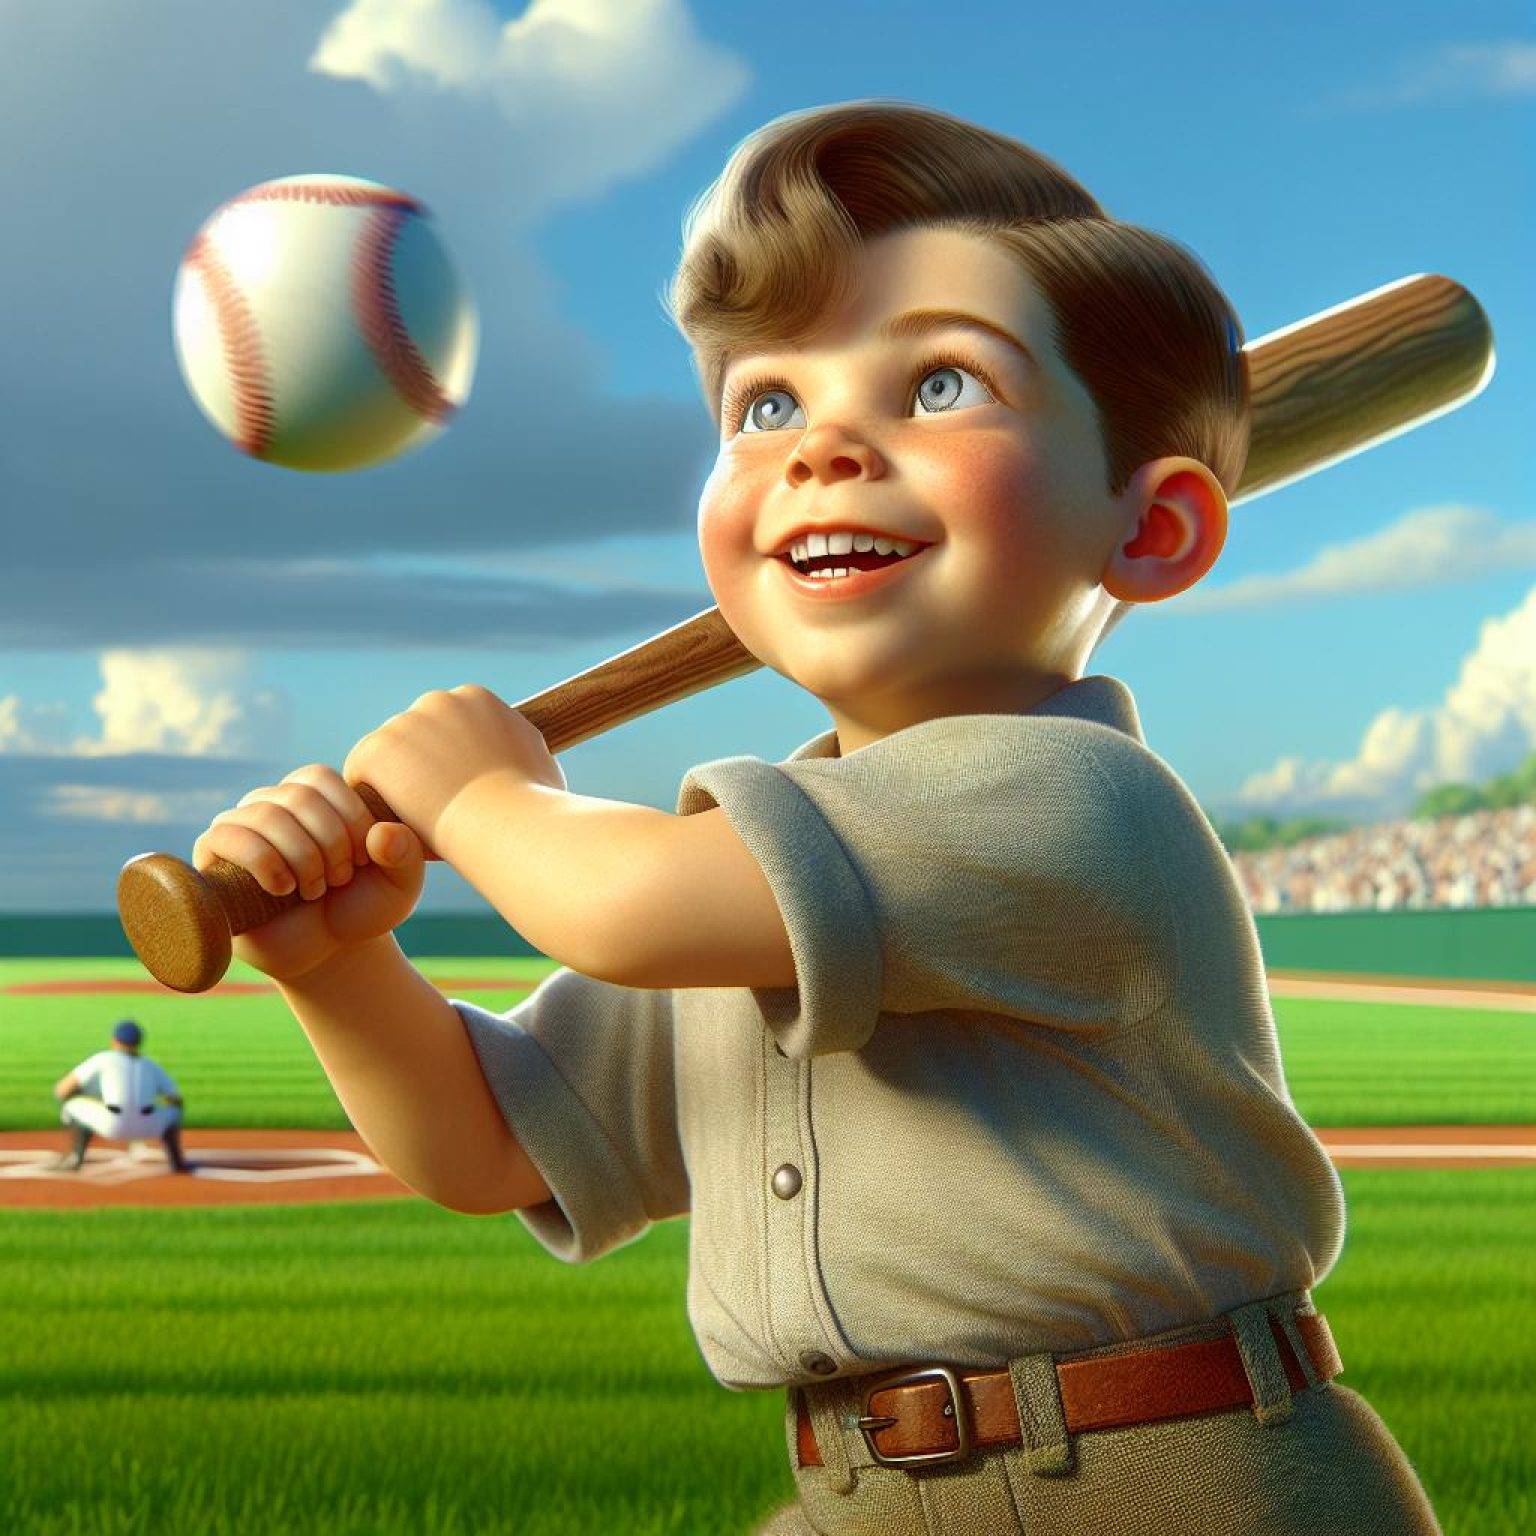 Child playing baseball dream.